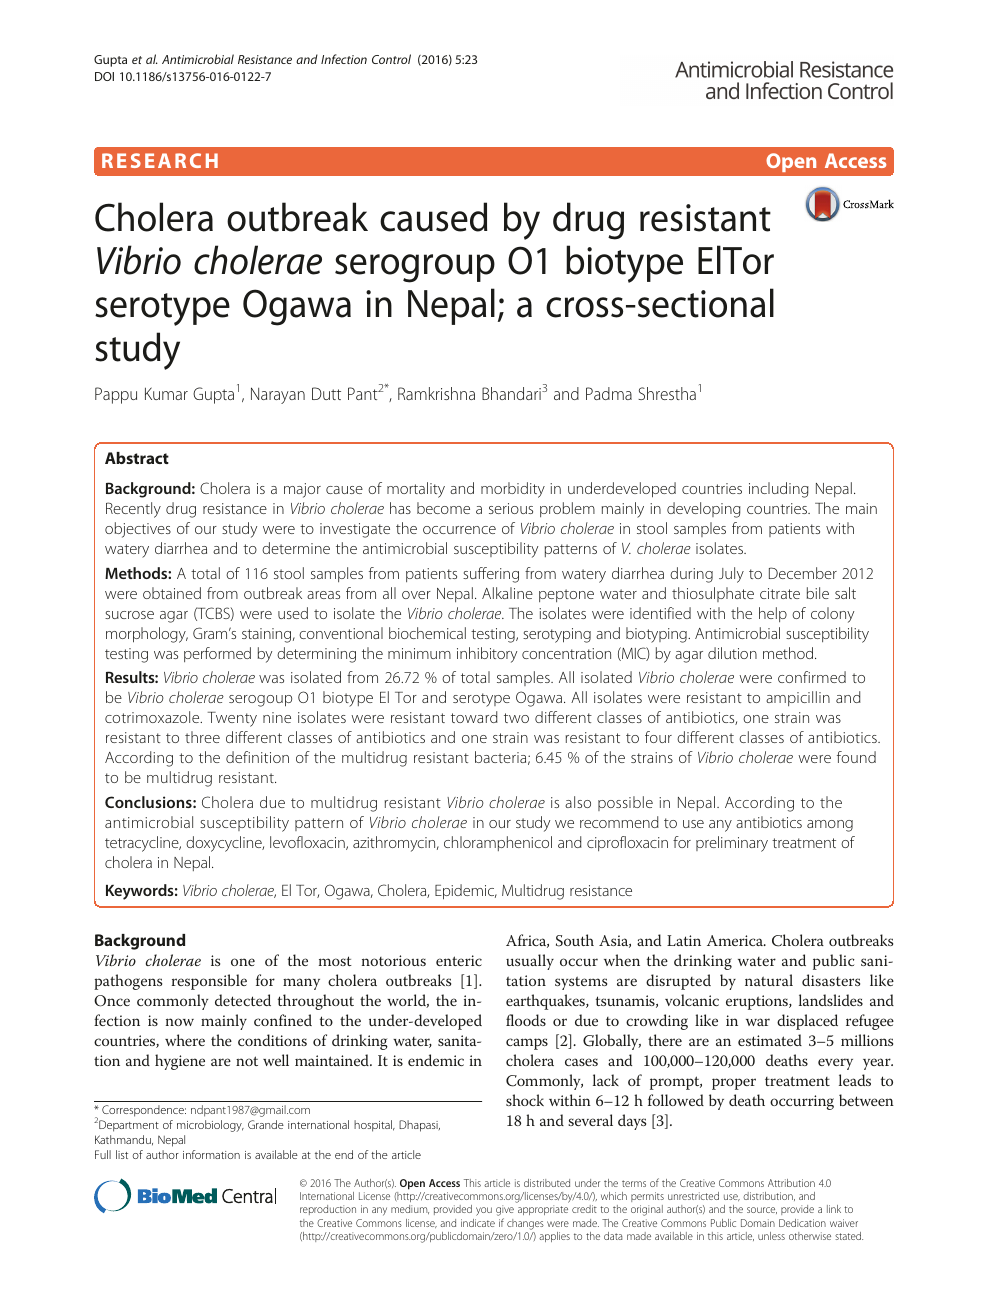 cholera treatment antibiotics